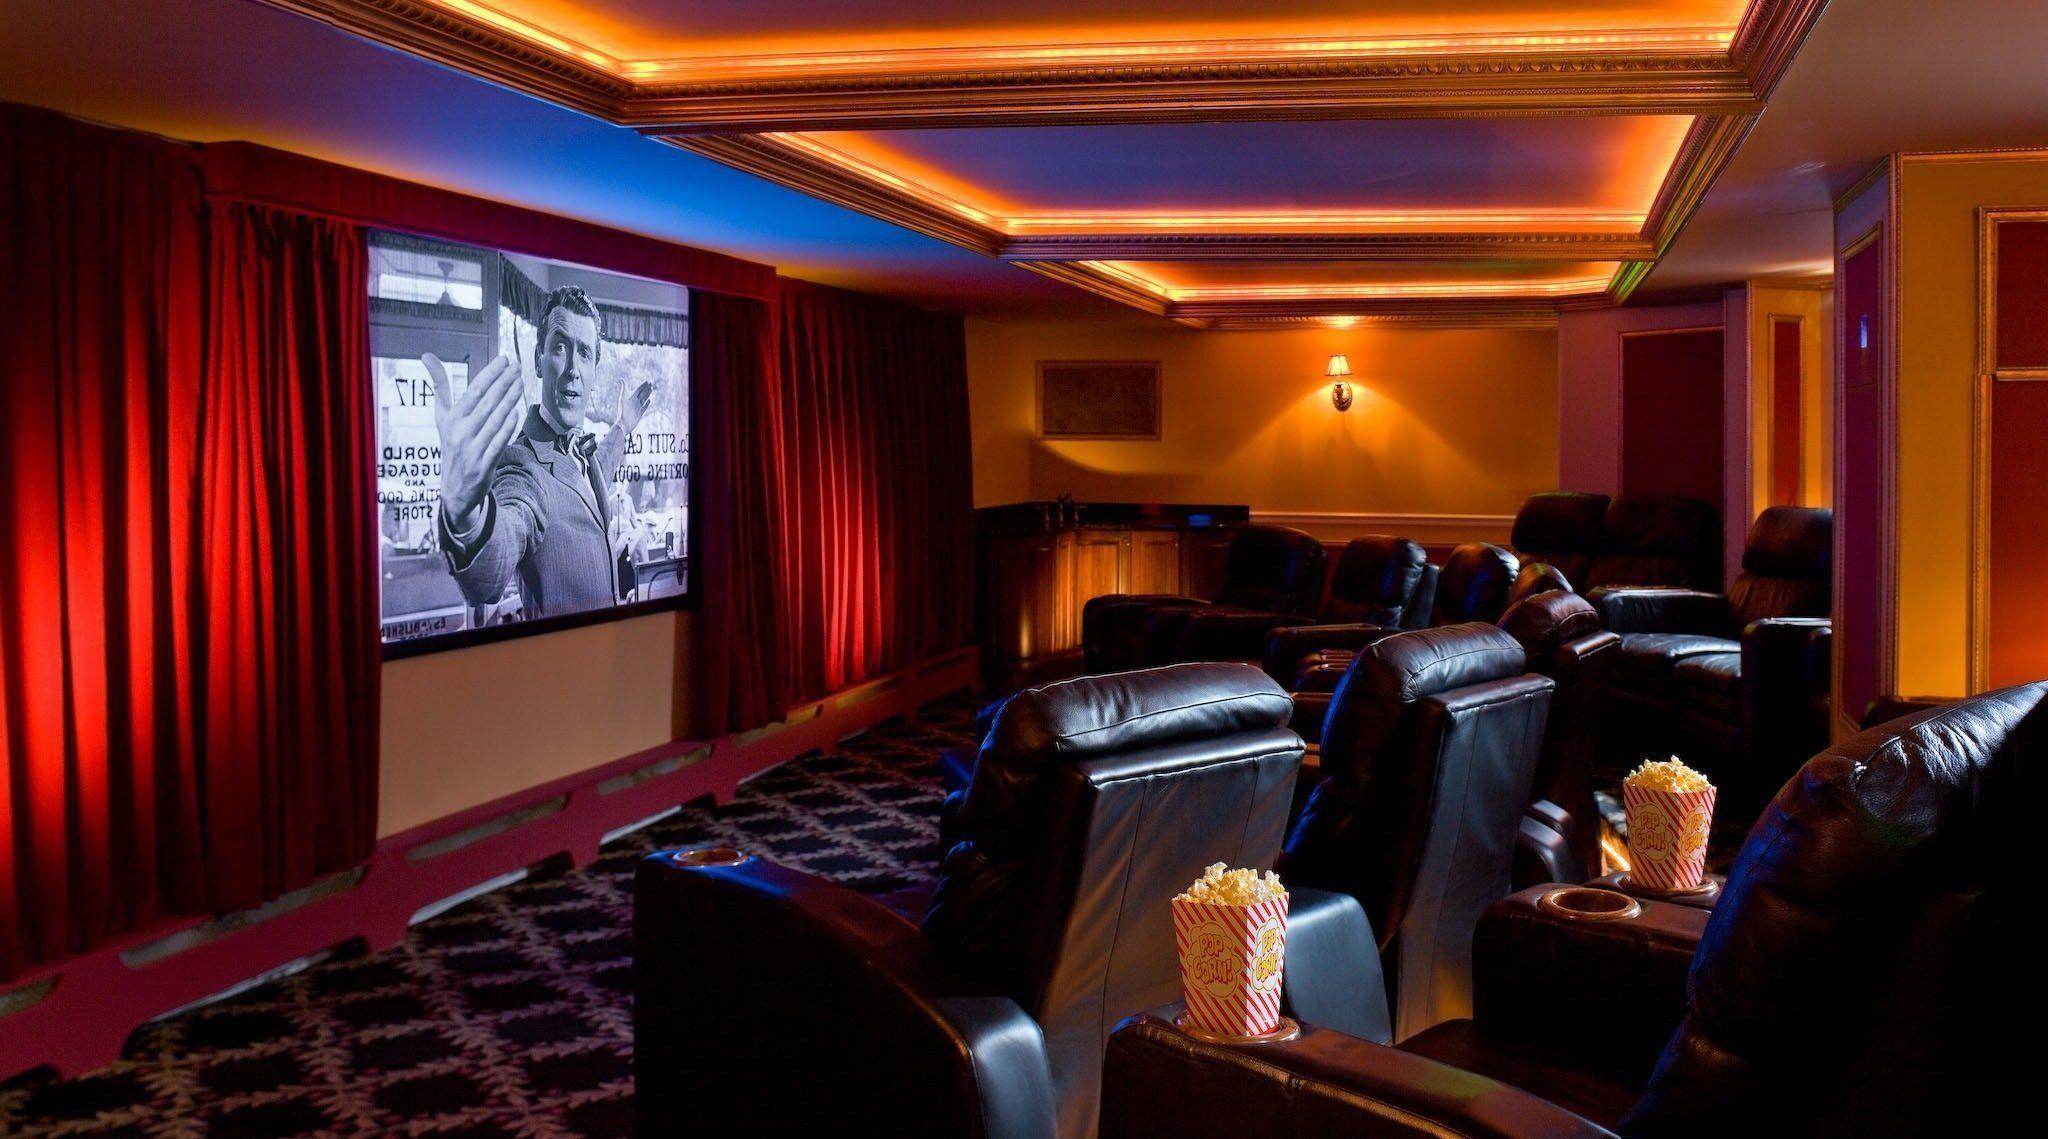 activitie interior movie theater home theater desigen ideas room